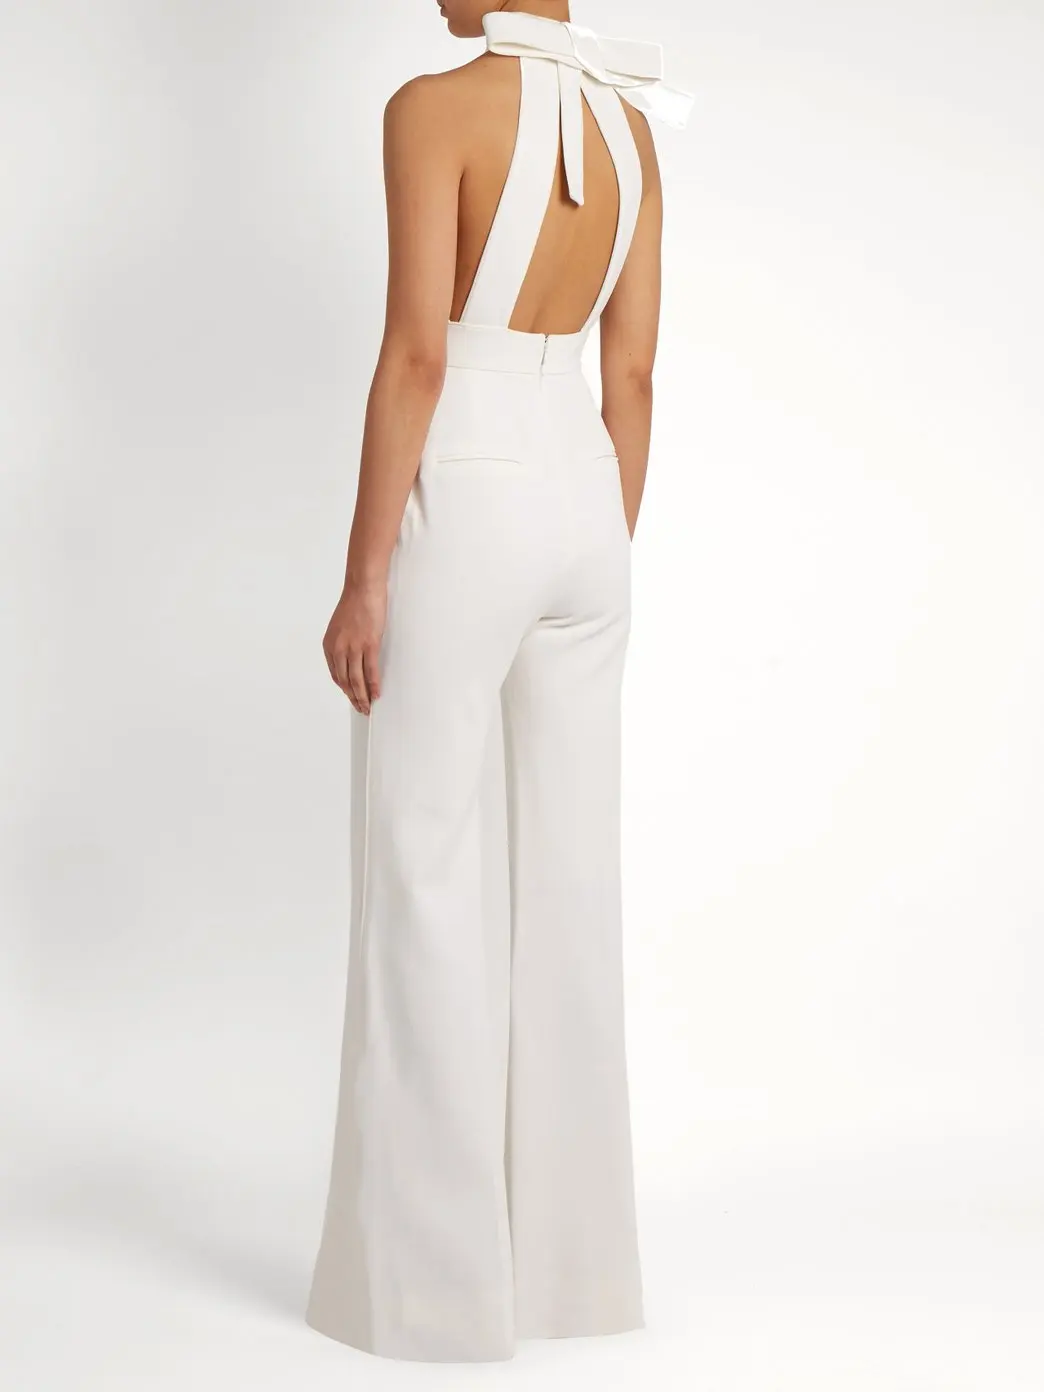 High Quality Ladies Elegant Plain White Evening Jumpsuits - Buy Ladies ...